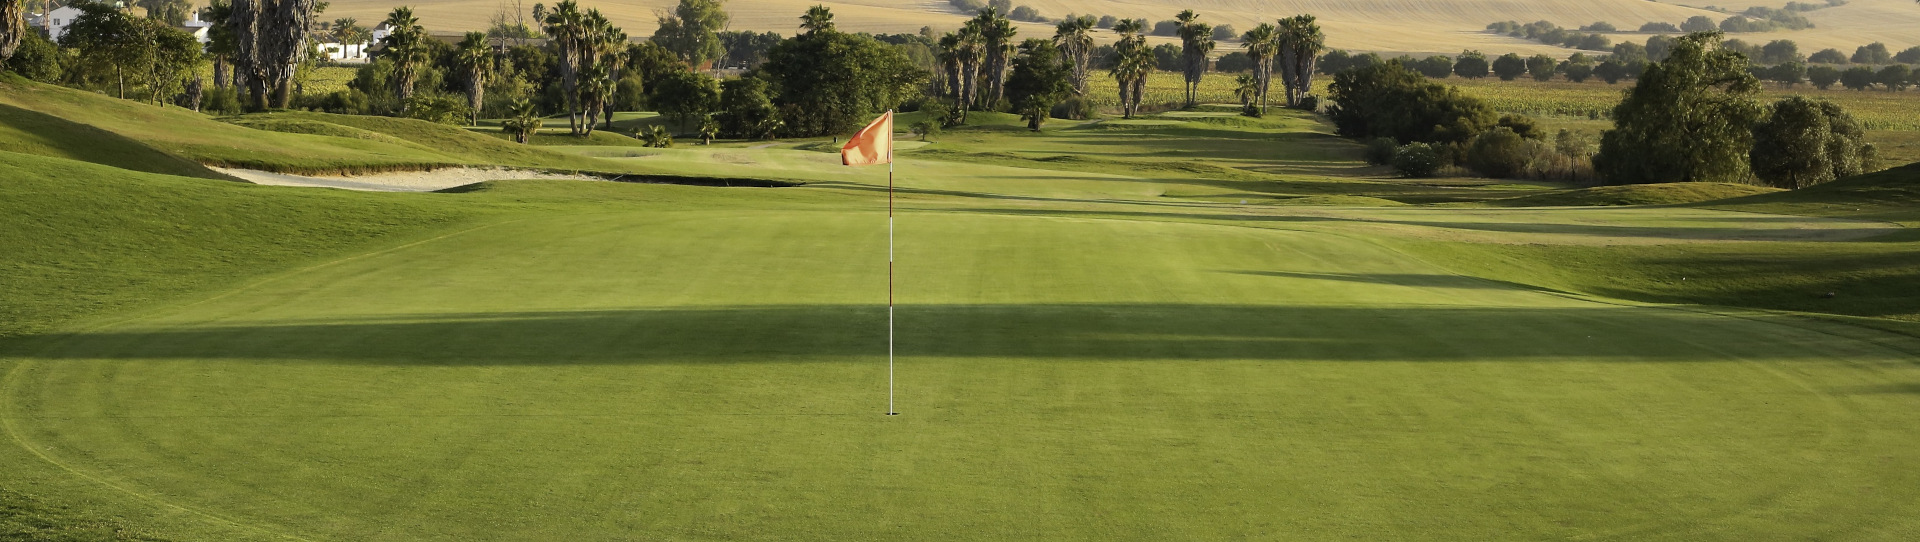 Spain golf courses - Sherry Golf Jerez - Photo 3